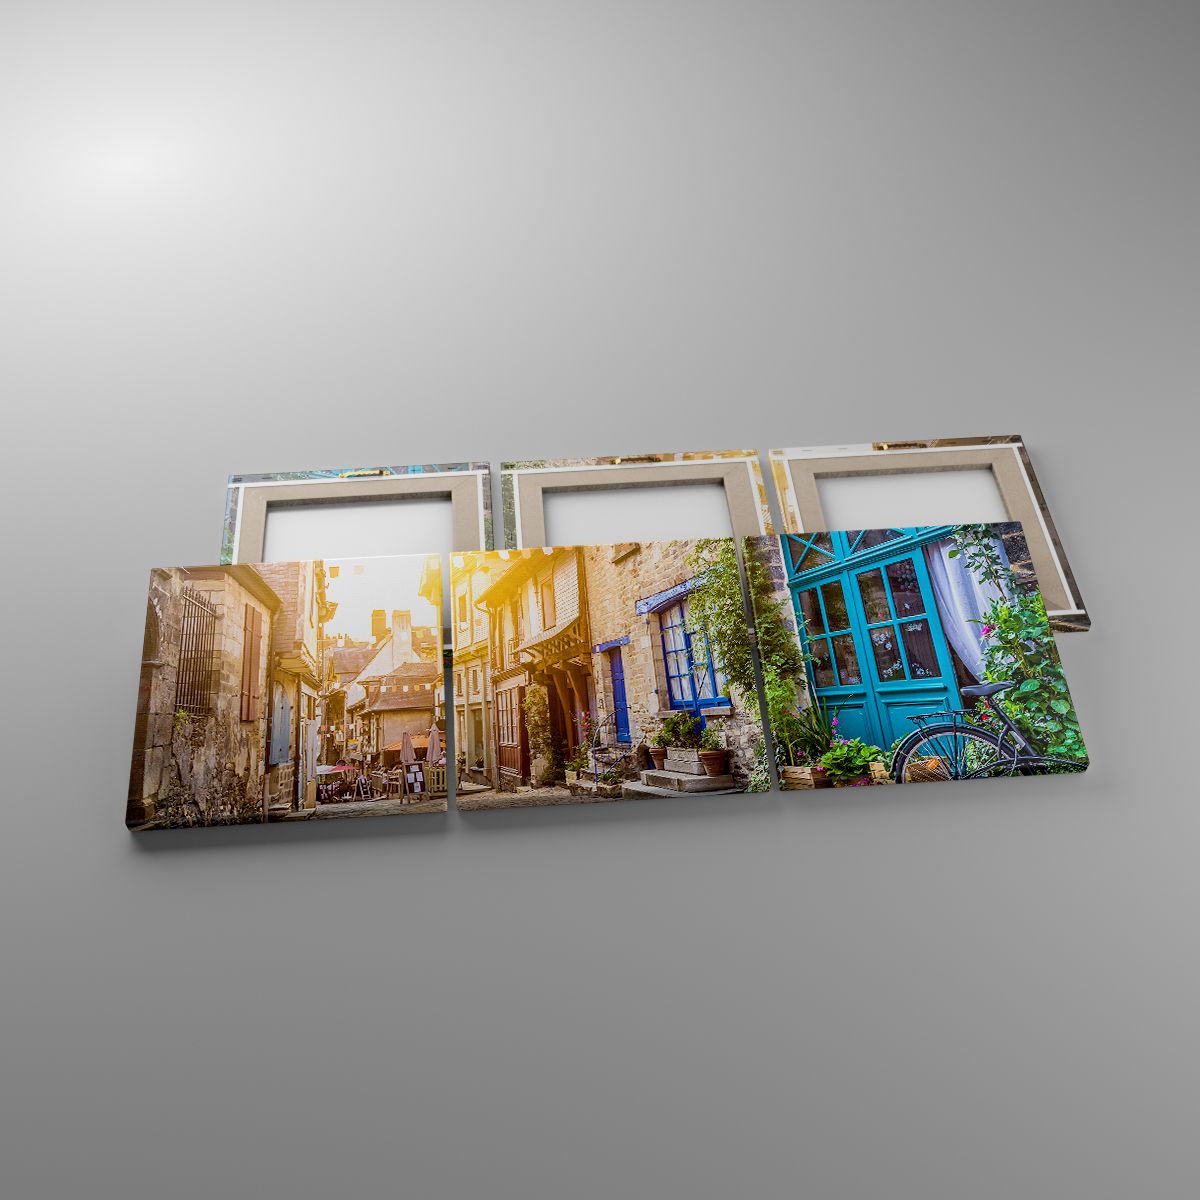 Leinwandbild Stadt, Leinwandbild Frankreich, Leinwandbild Die Architektur, Leinwandbild Gasse, Leinwandbild Sonnenstrahlen